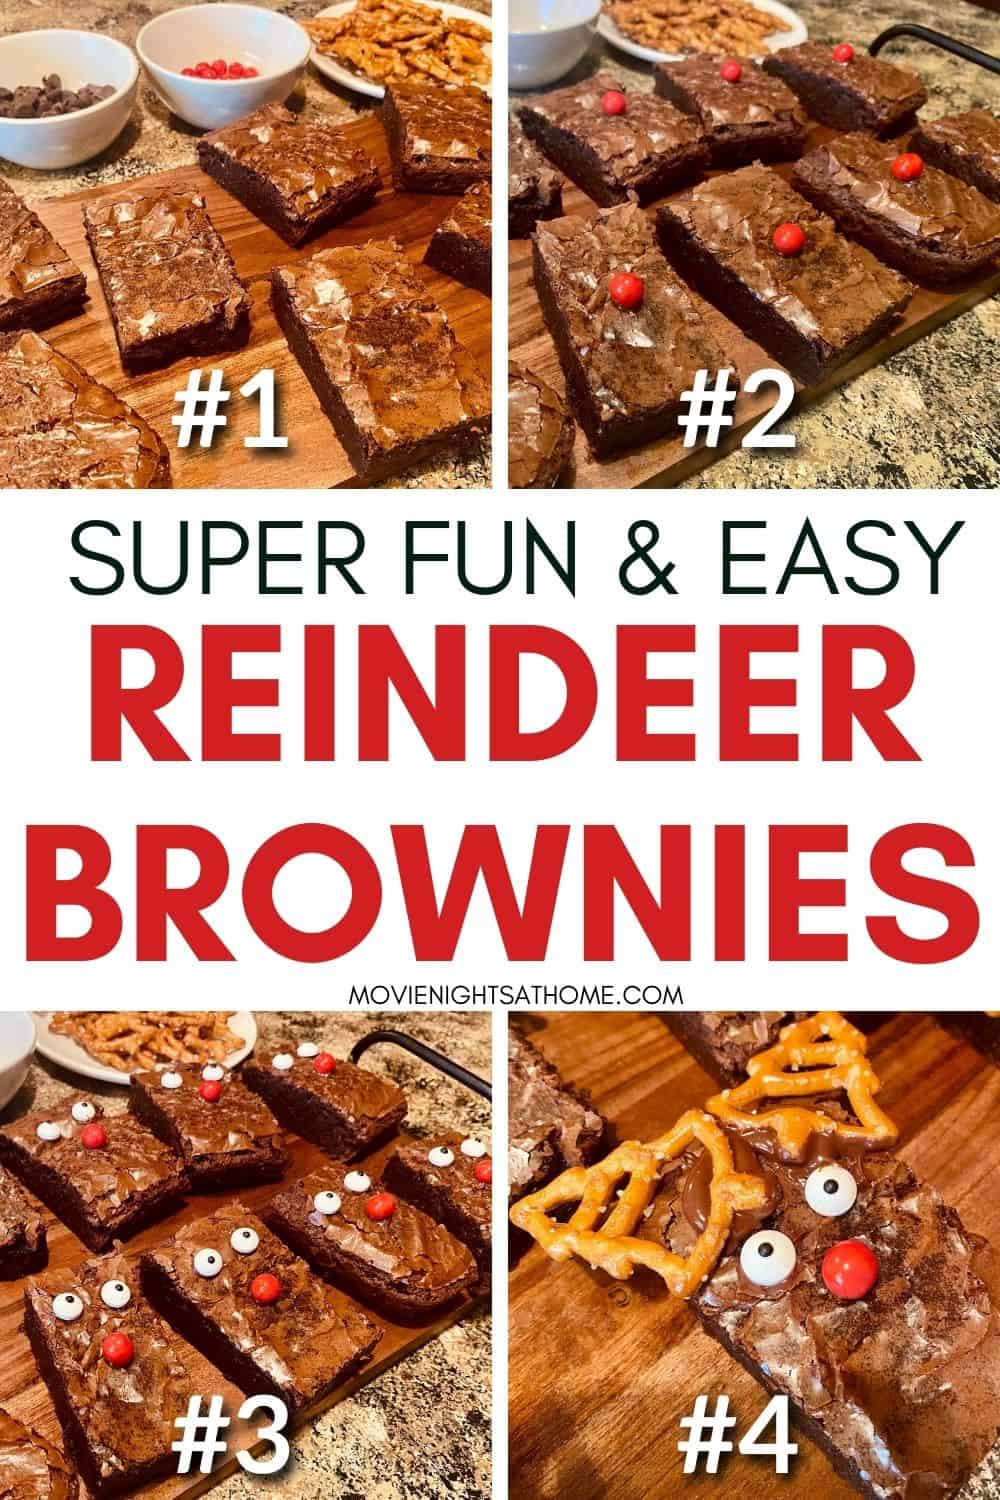 step by step visual guide to create this reindeer brownie craft